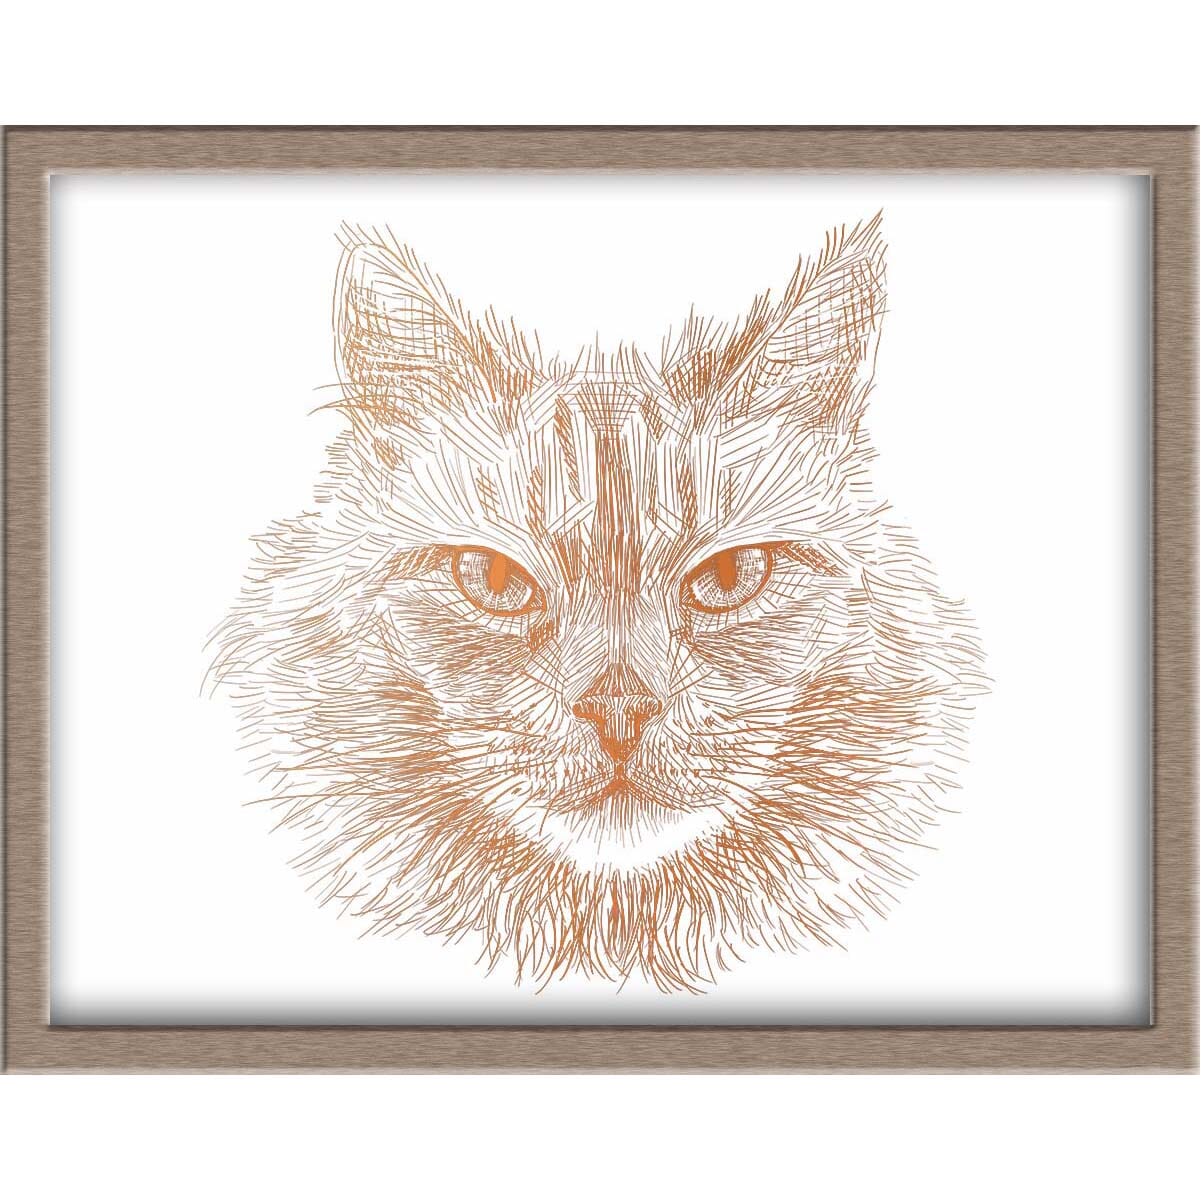 Mysterious Cat Portrait Foiled Print (Ducky) Posters, Prints, & Visual Artwork JoyousJoyfulJoyness 